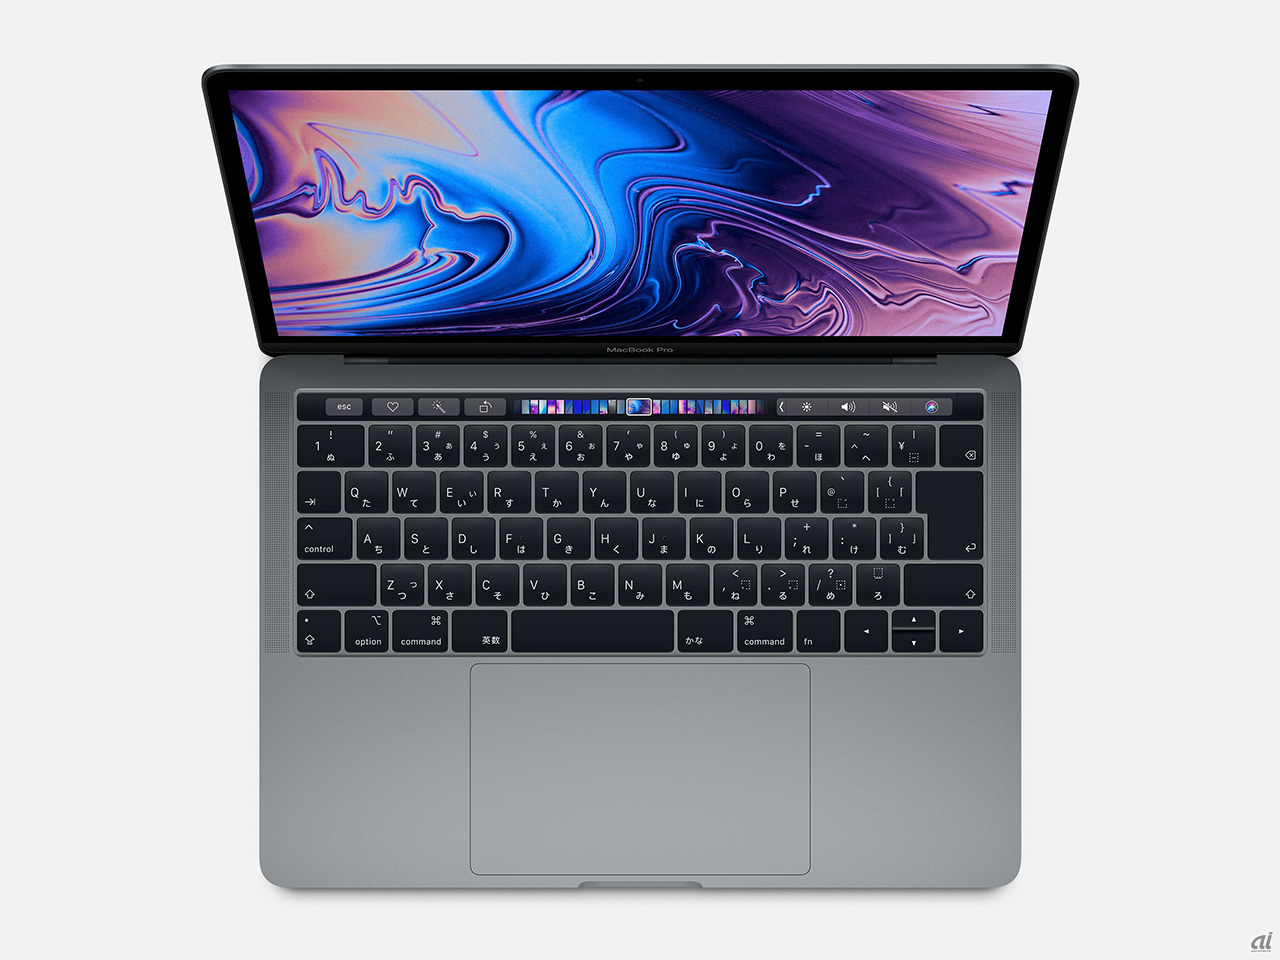 「MacBook Pro 13インチ」の2019年モデル
